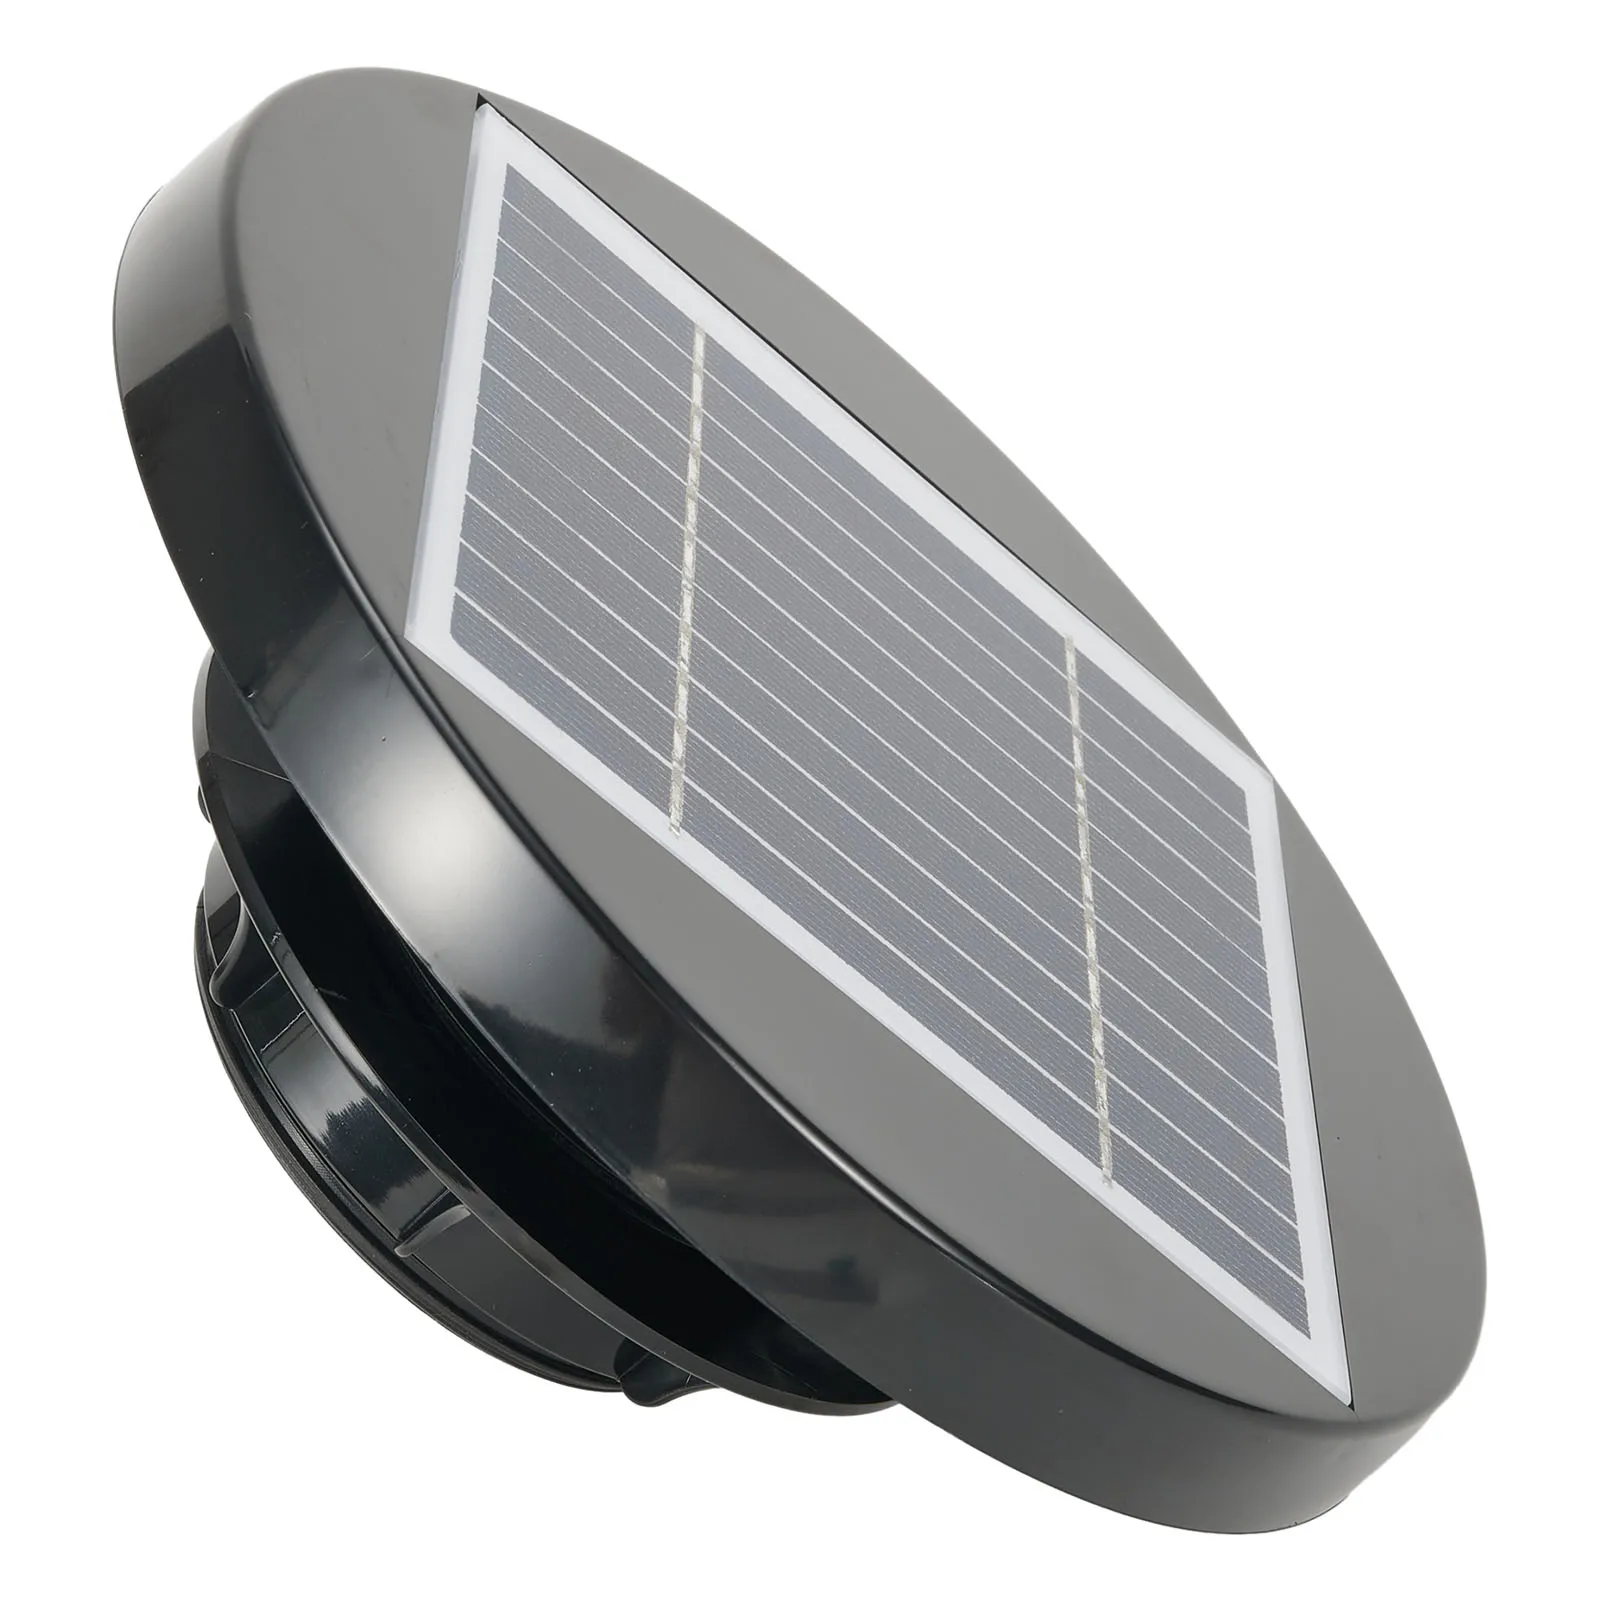 

DC Ball Bearing Solar Fan Solar Fan 2.5W DC Ball Bearing Polycrystalline 5.5V Simple Installation For Garden Sheds